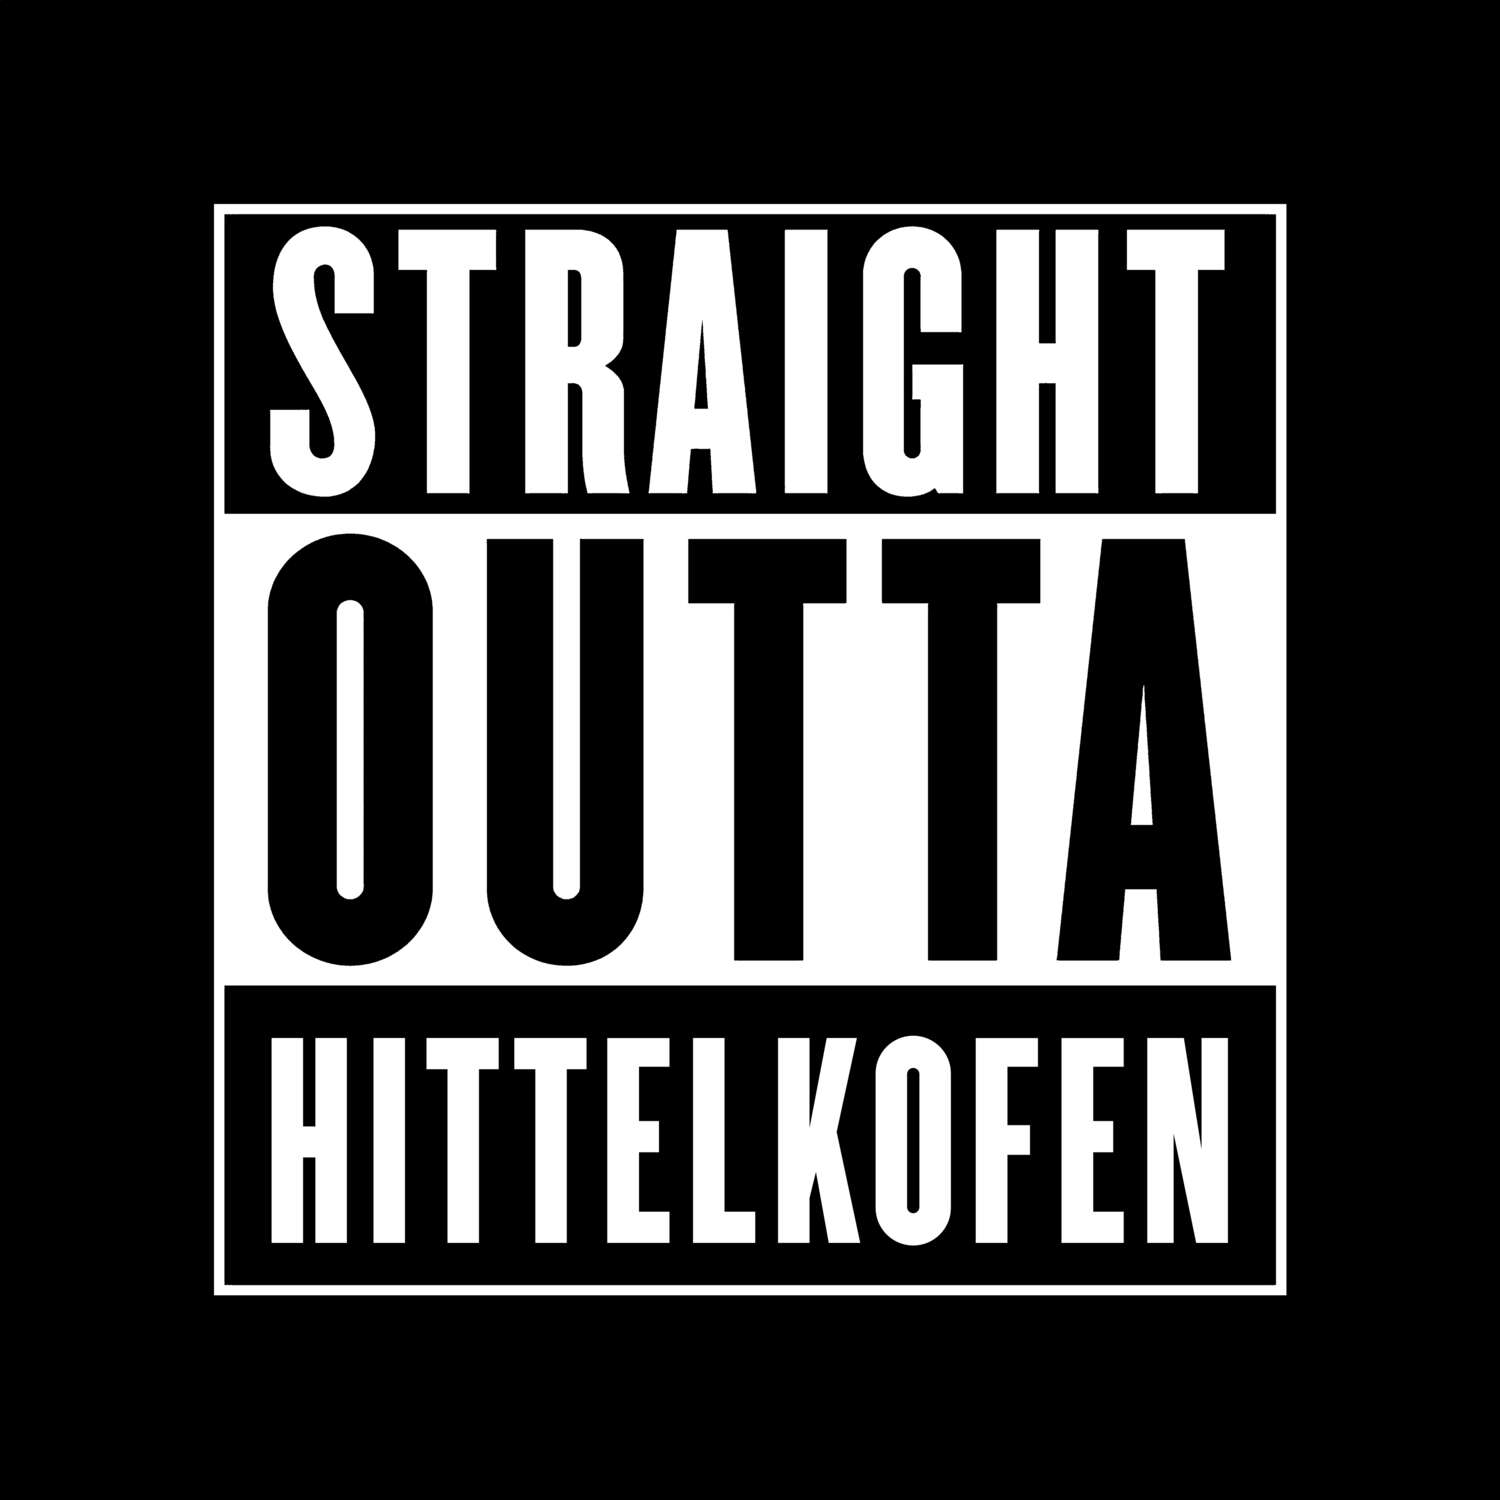 Hittelkofen T-Shirt »Straight Outta«